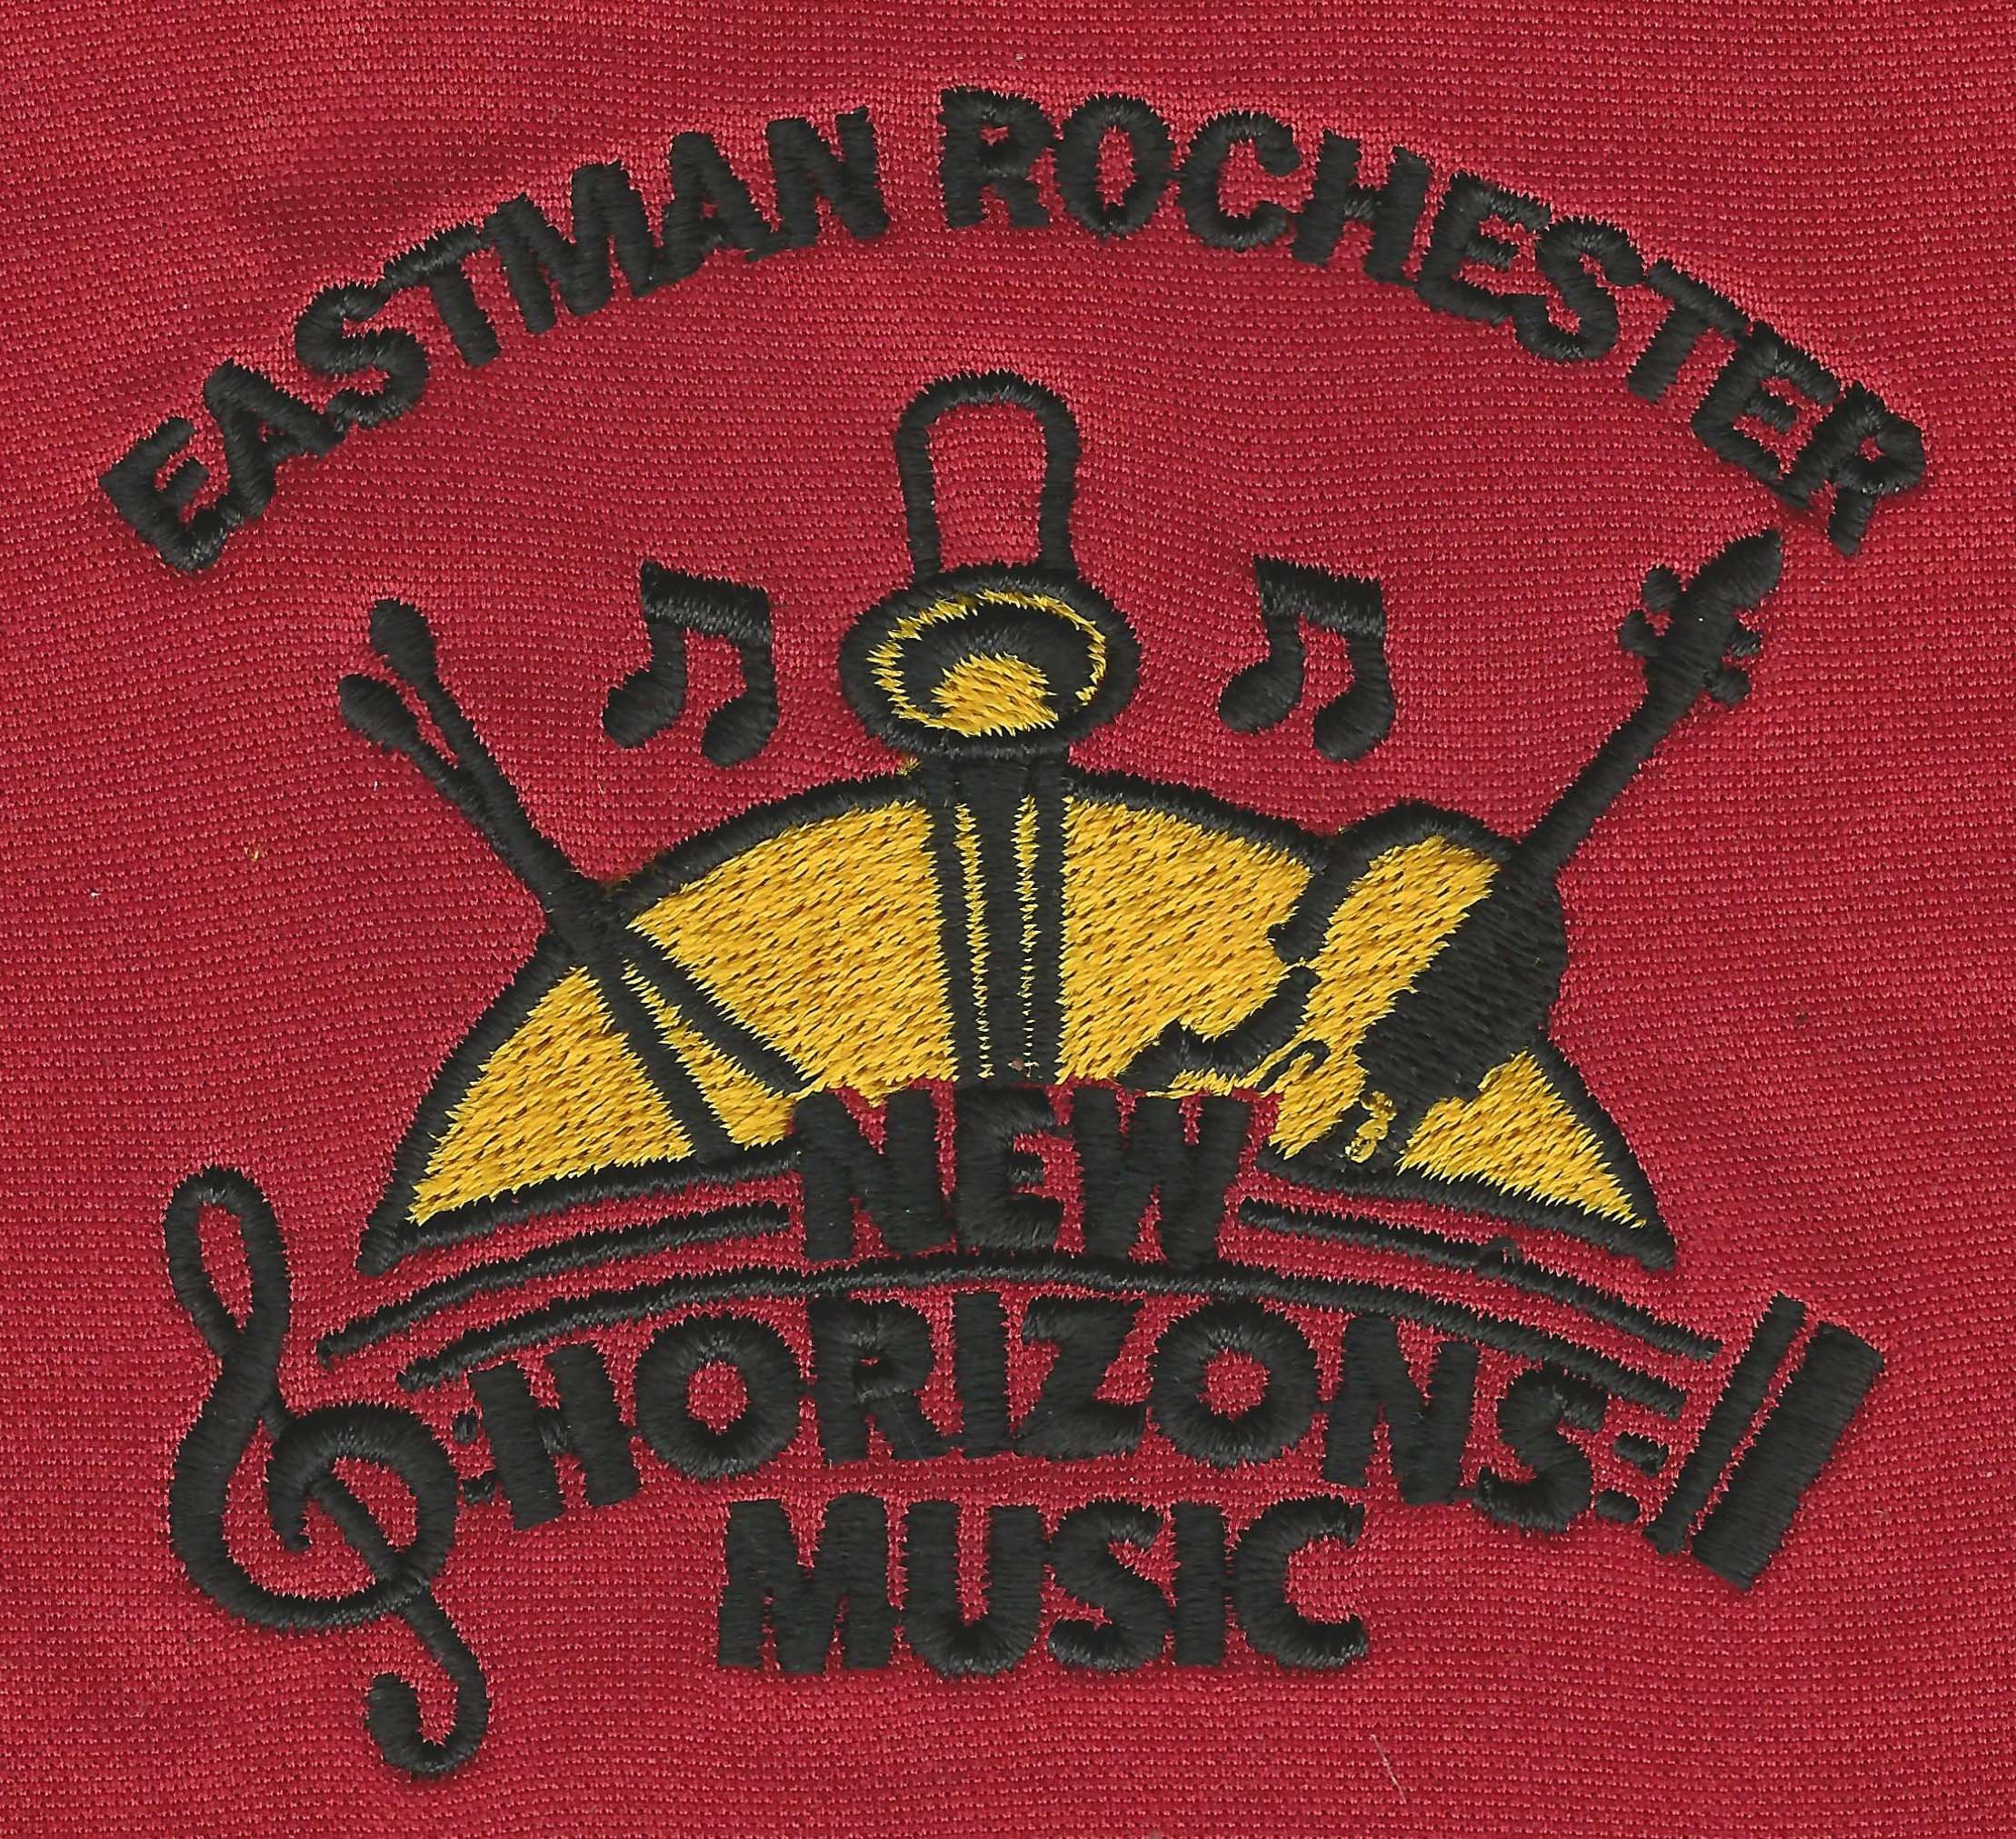 New Horizons Music, Eastman Rochester Chapter